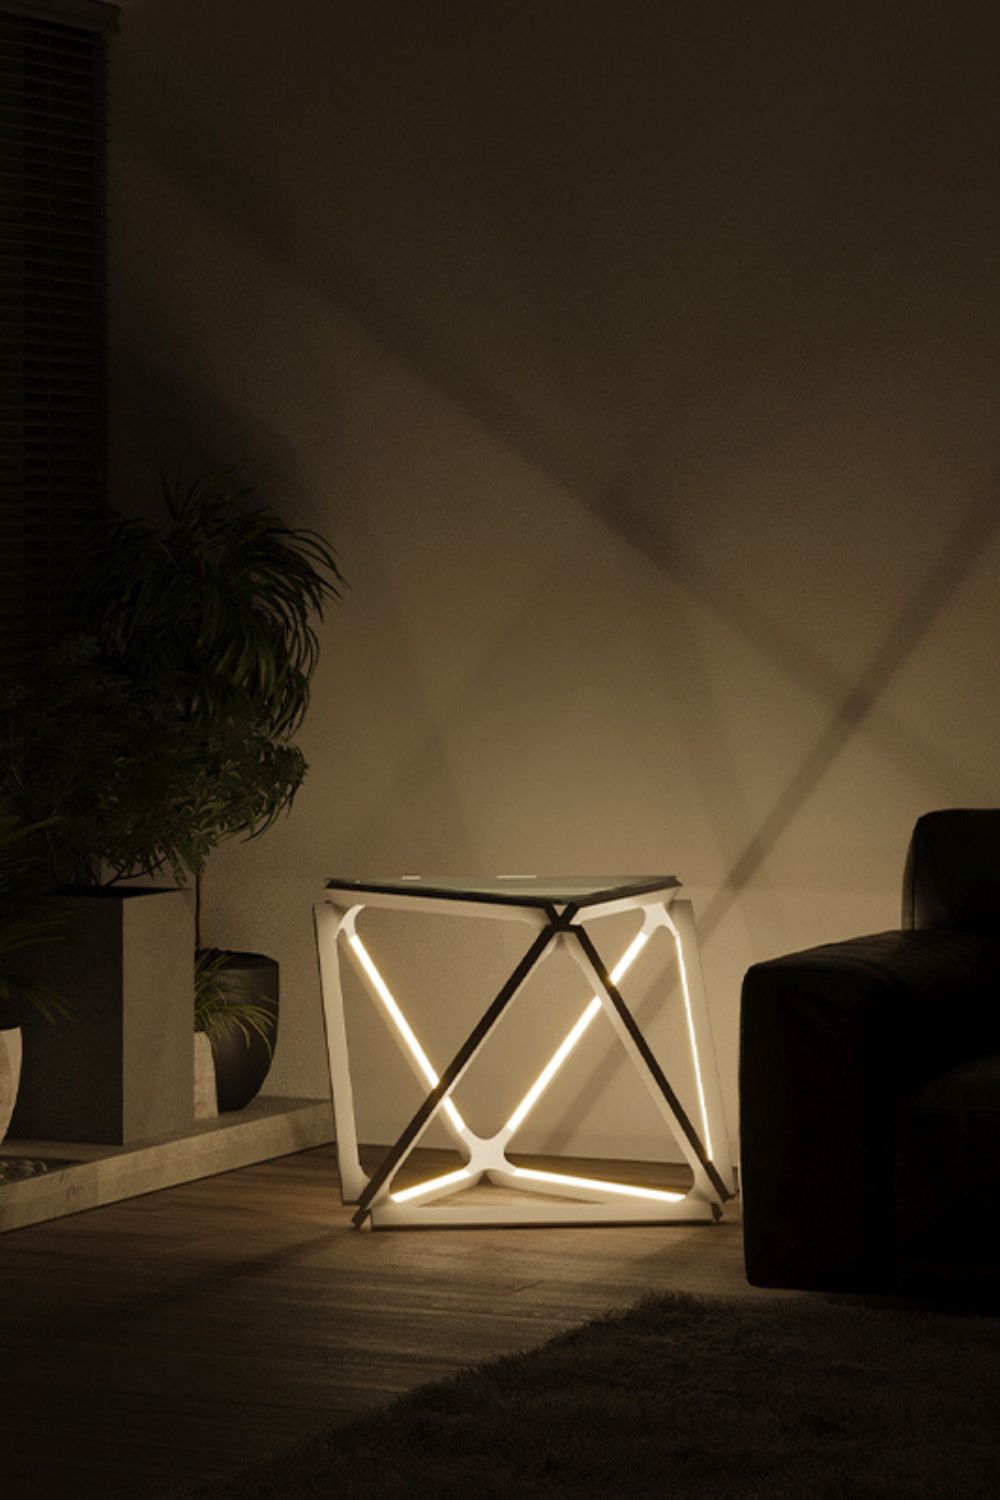 X-Light Table Ebonized - SamuLighting